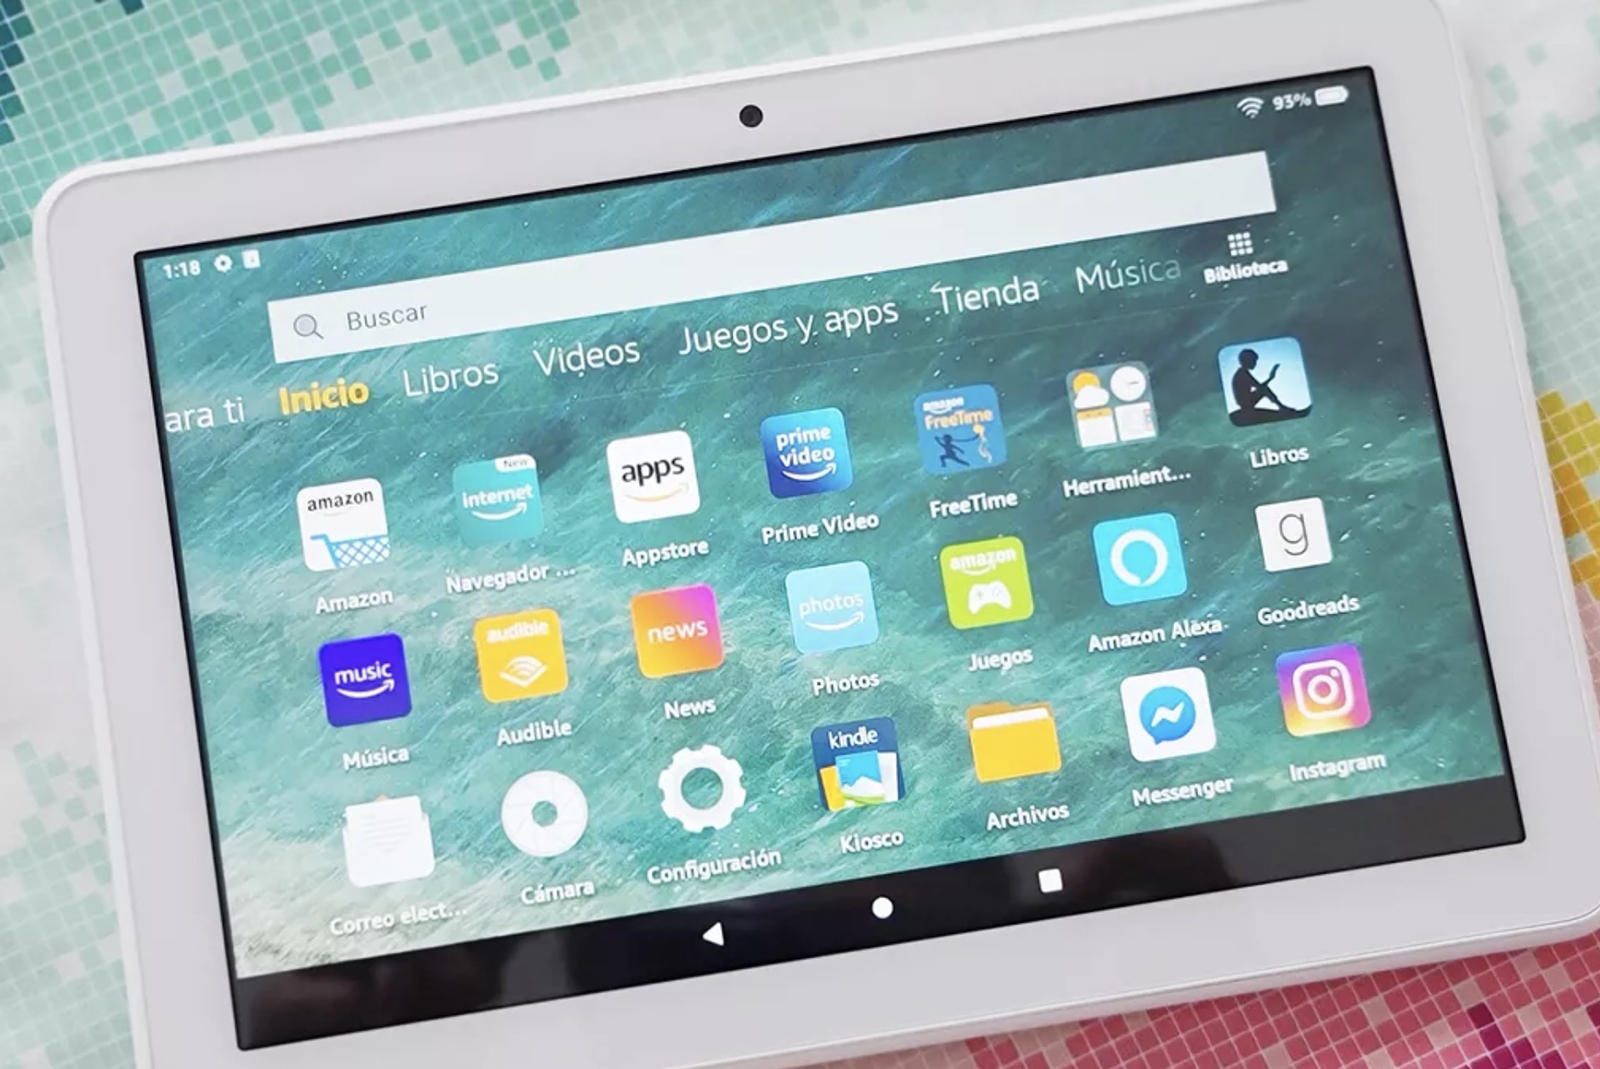 best-amazon-tablet-amazon-fire-hd-8-review.jpg